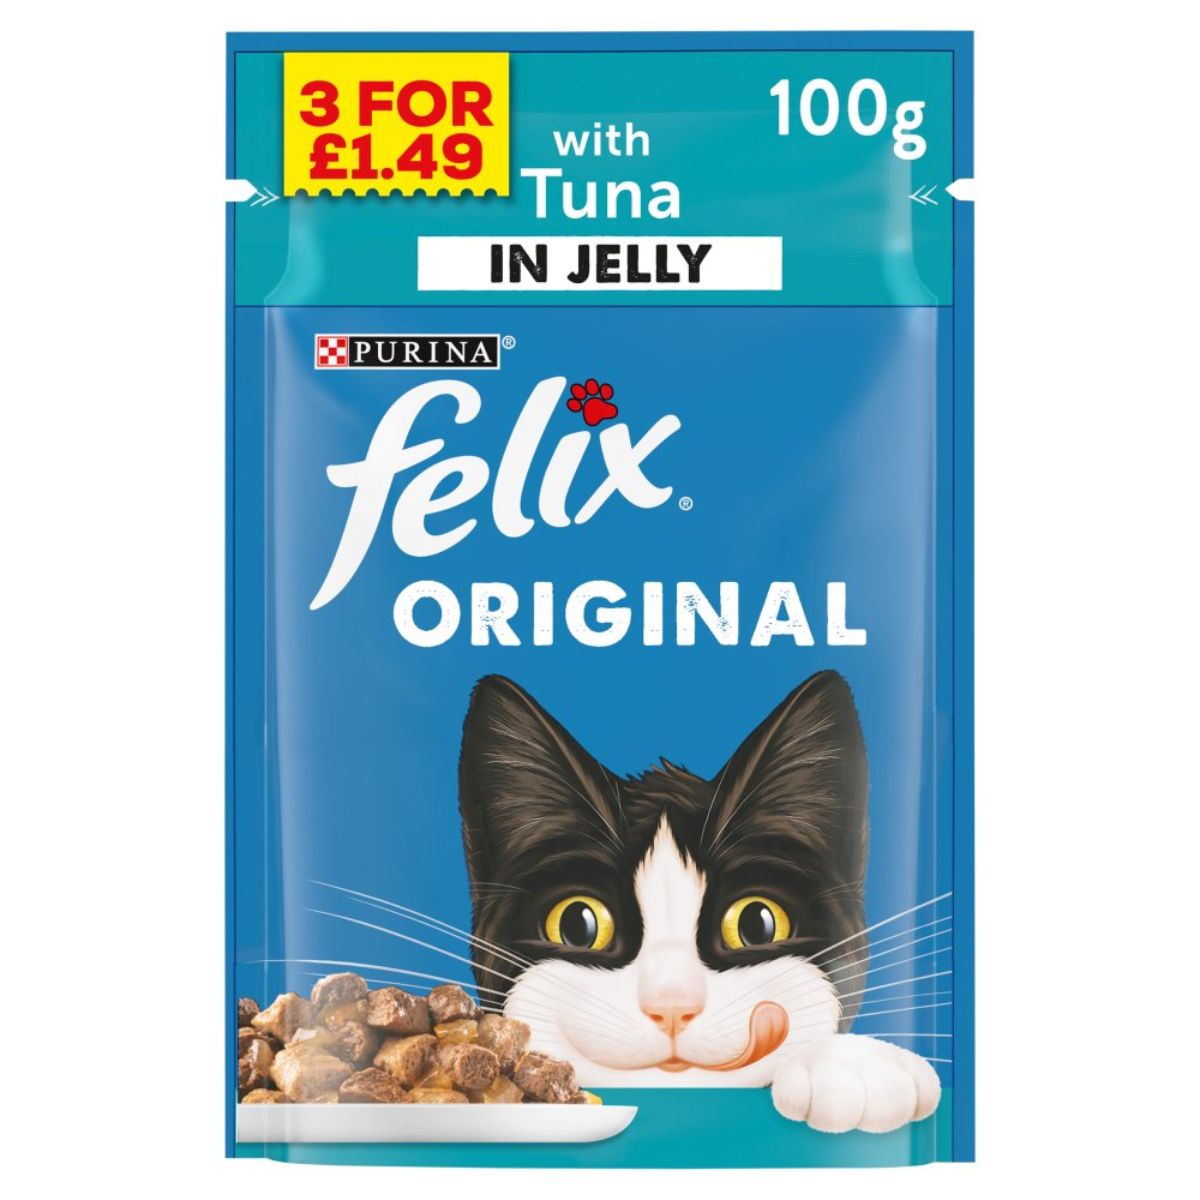 Felix - Original with Tuna in Jelly - 100g cat food.